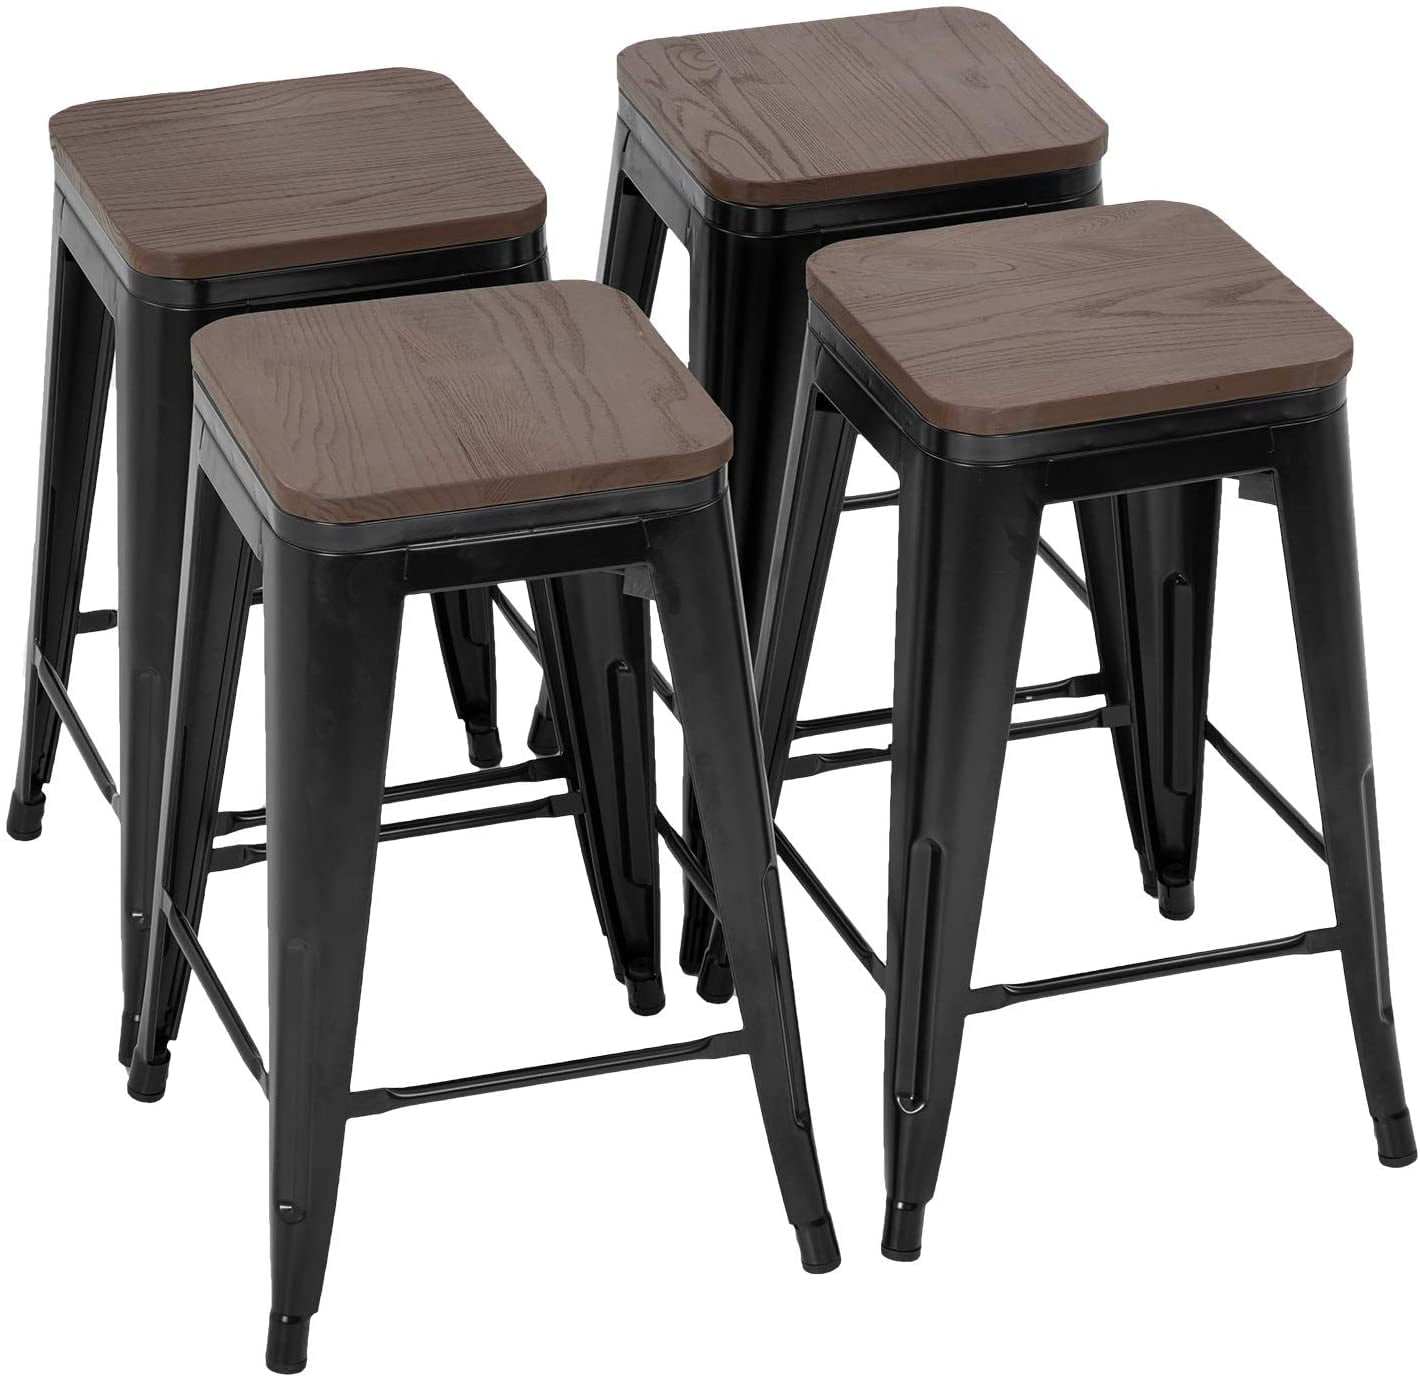 330 lbs Capacity ZENY Set of 4 Metal Bar Stools 26 Counter Height with Wooden Seat Stackable Indoor/Outdoor Barstools